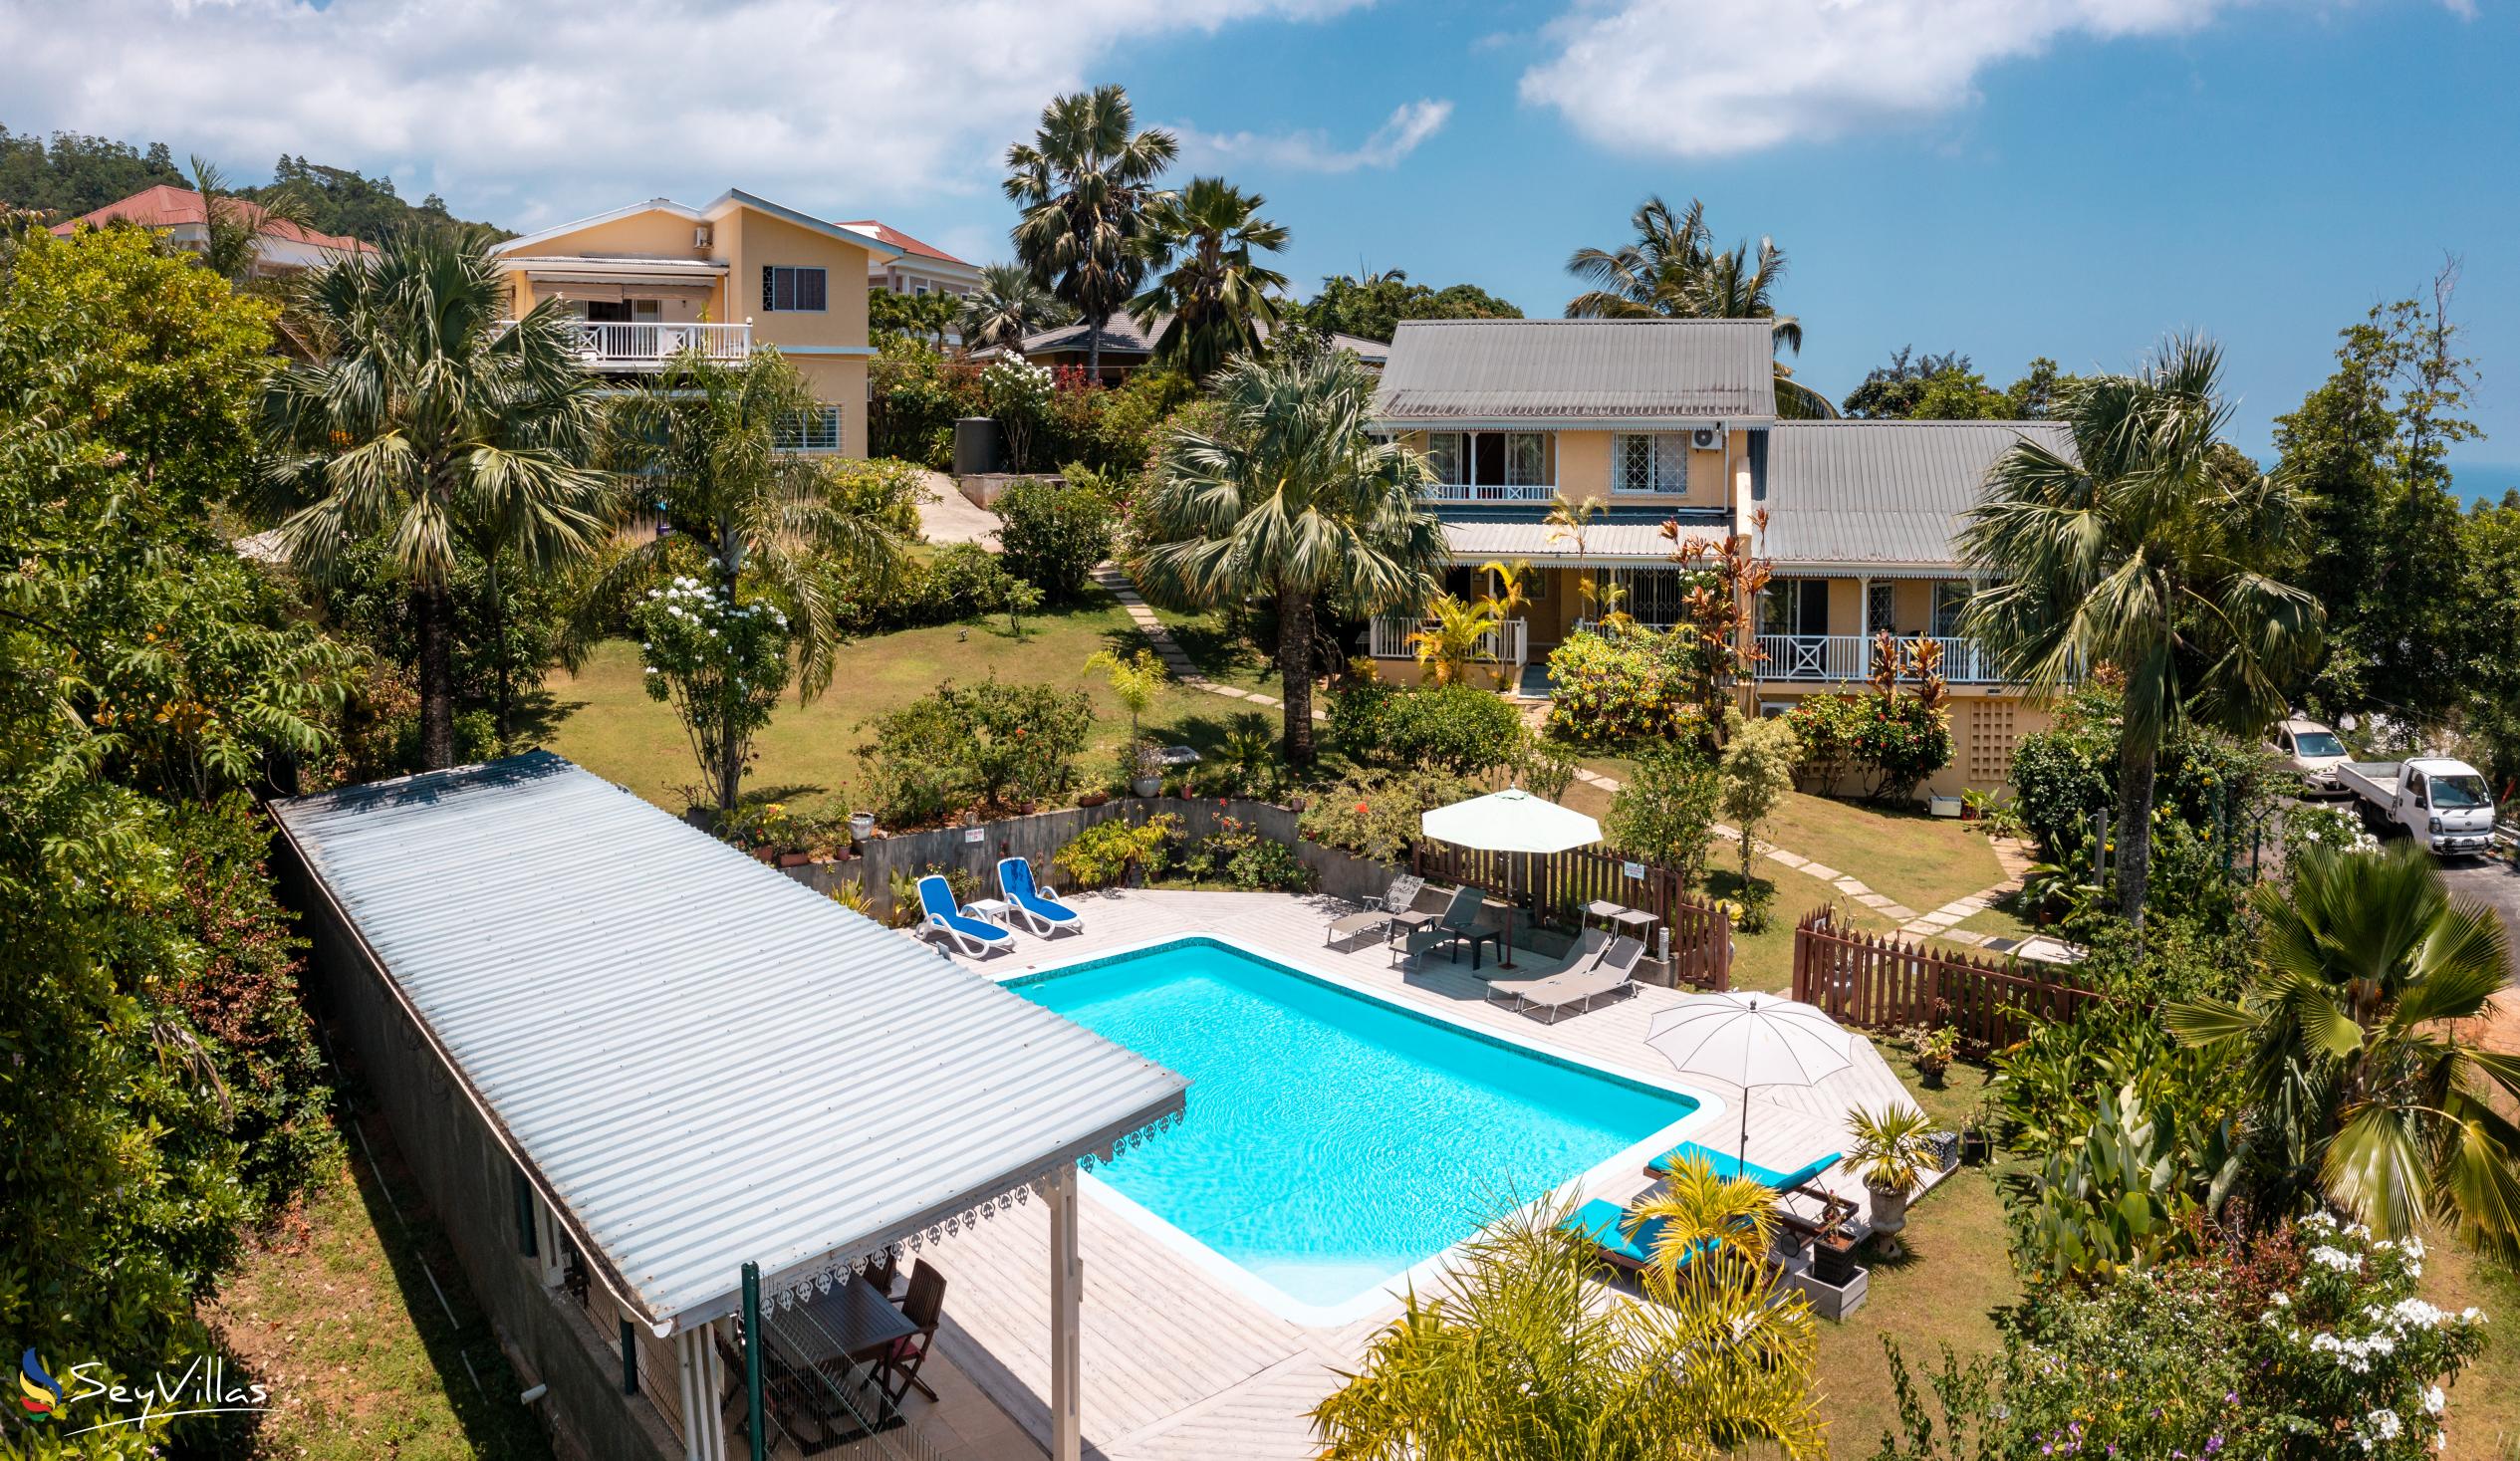 Photo 1: Residence Monte Cristo - Outdoor area - Mahé (Seychelles)